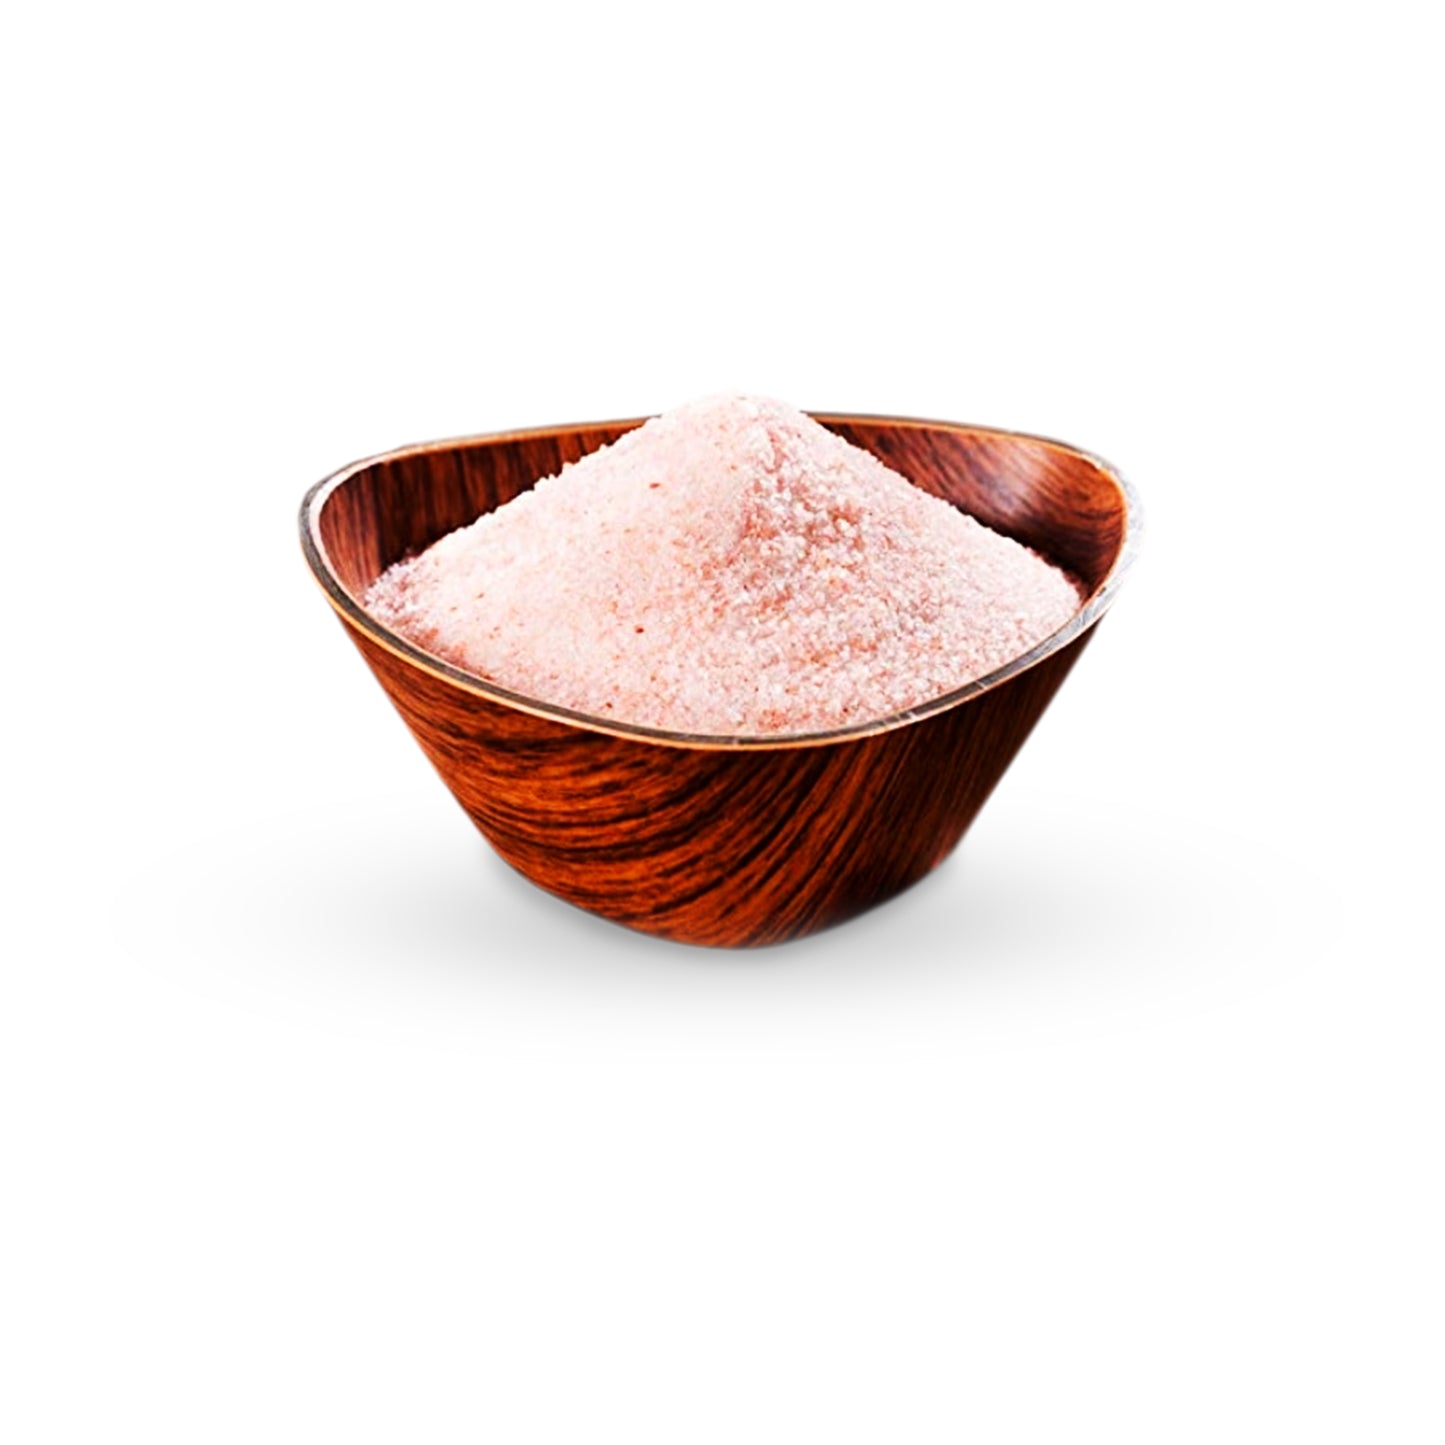 Edible Himalayan Pink Salt - Coarse Grain - Pack of 10 - 1 Pound